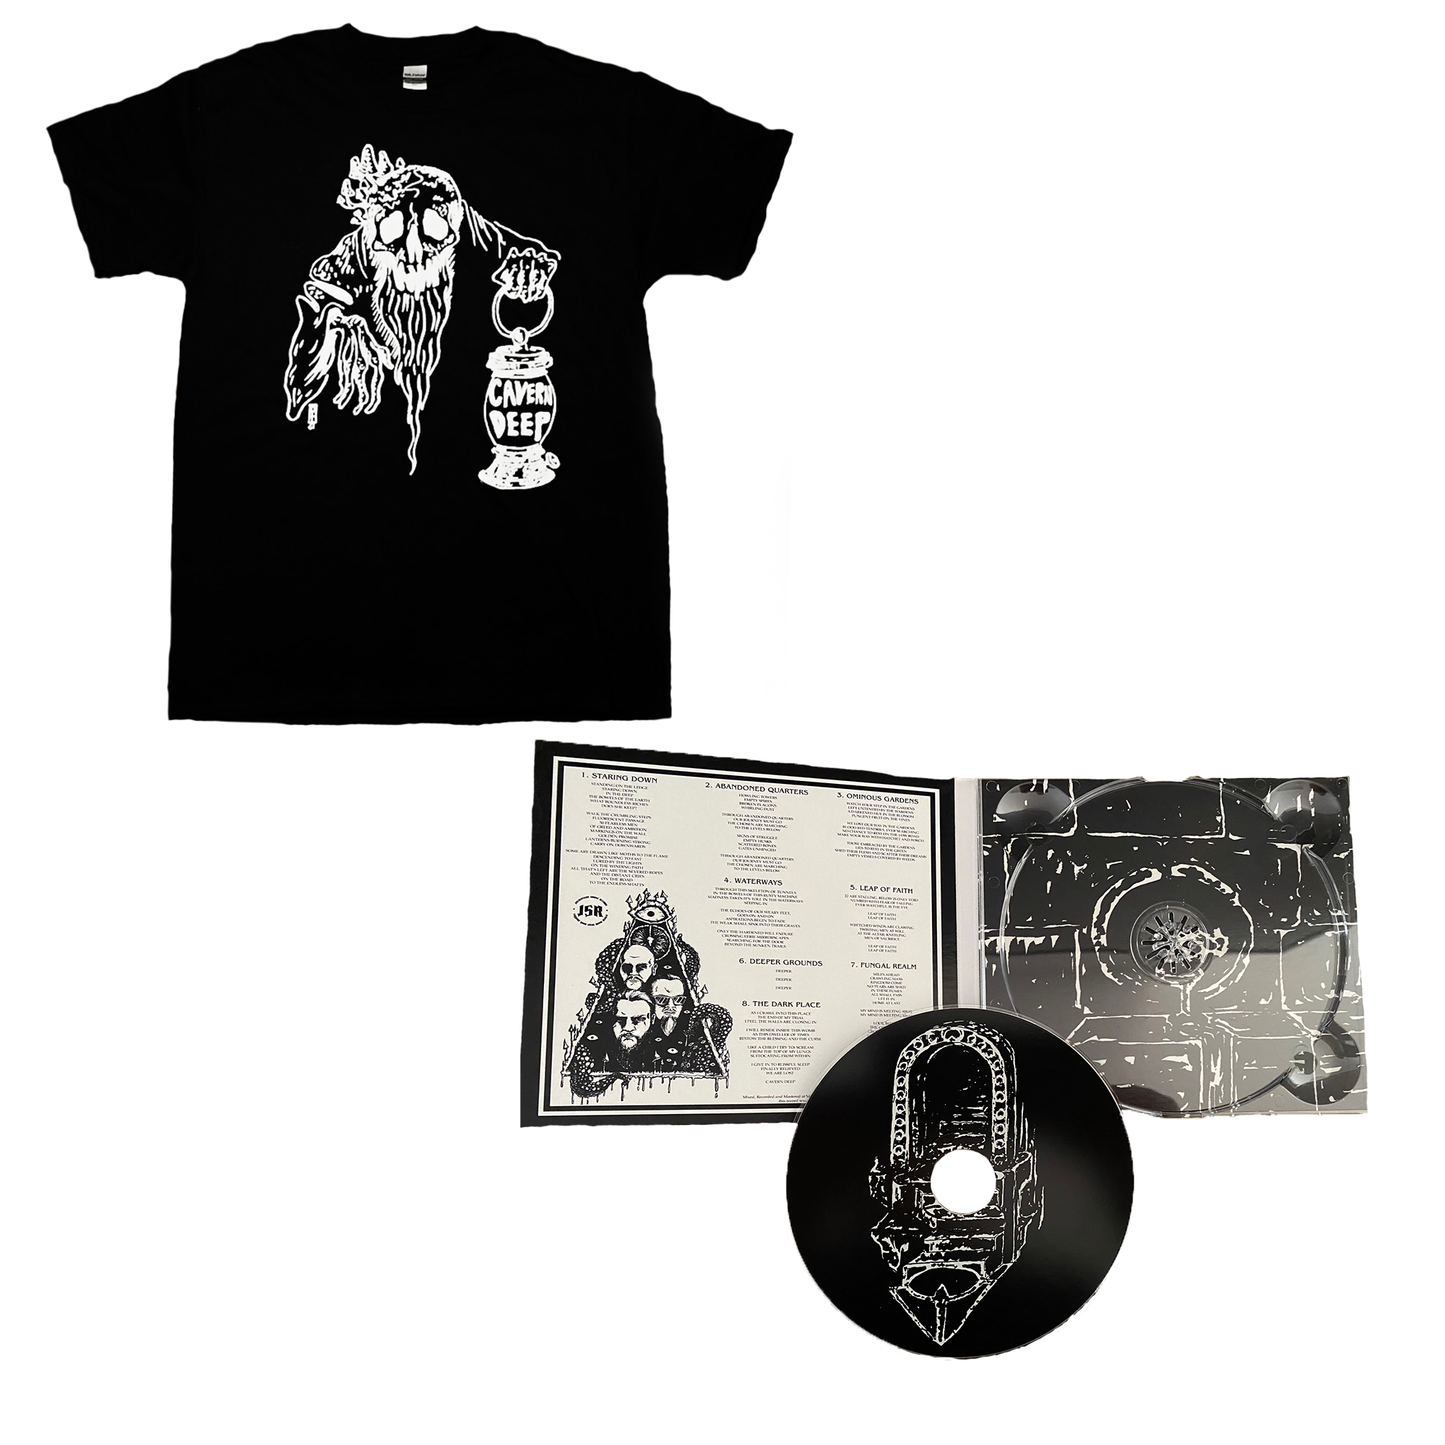 Cavern Deep Latern Man T-Shirt and Digipack CD Bundle